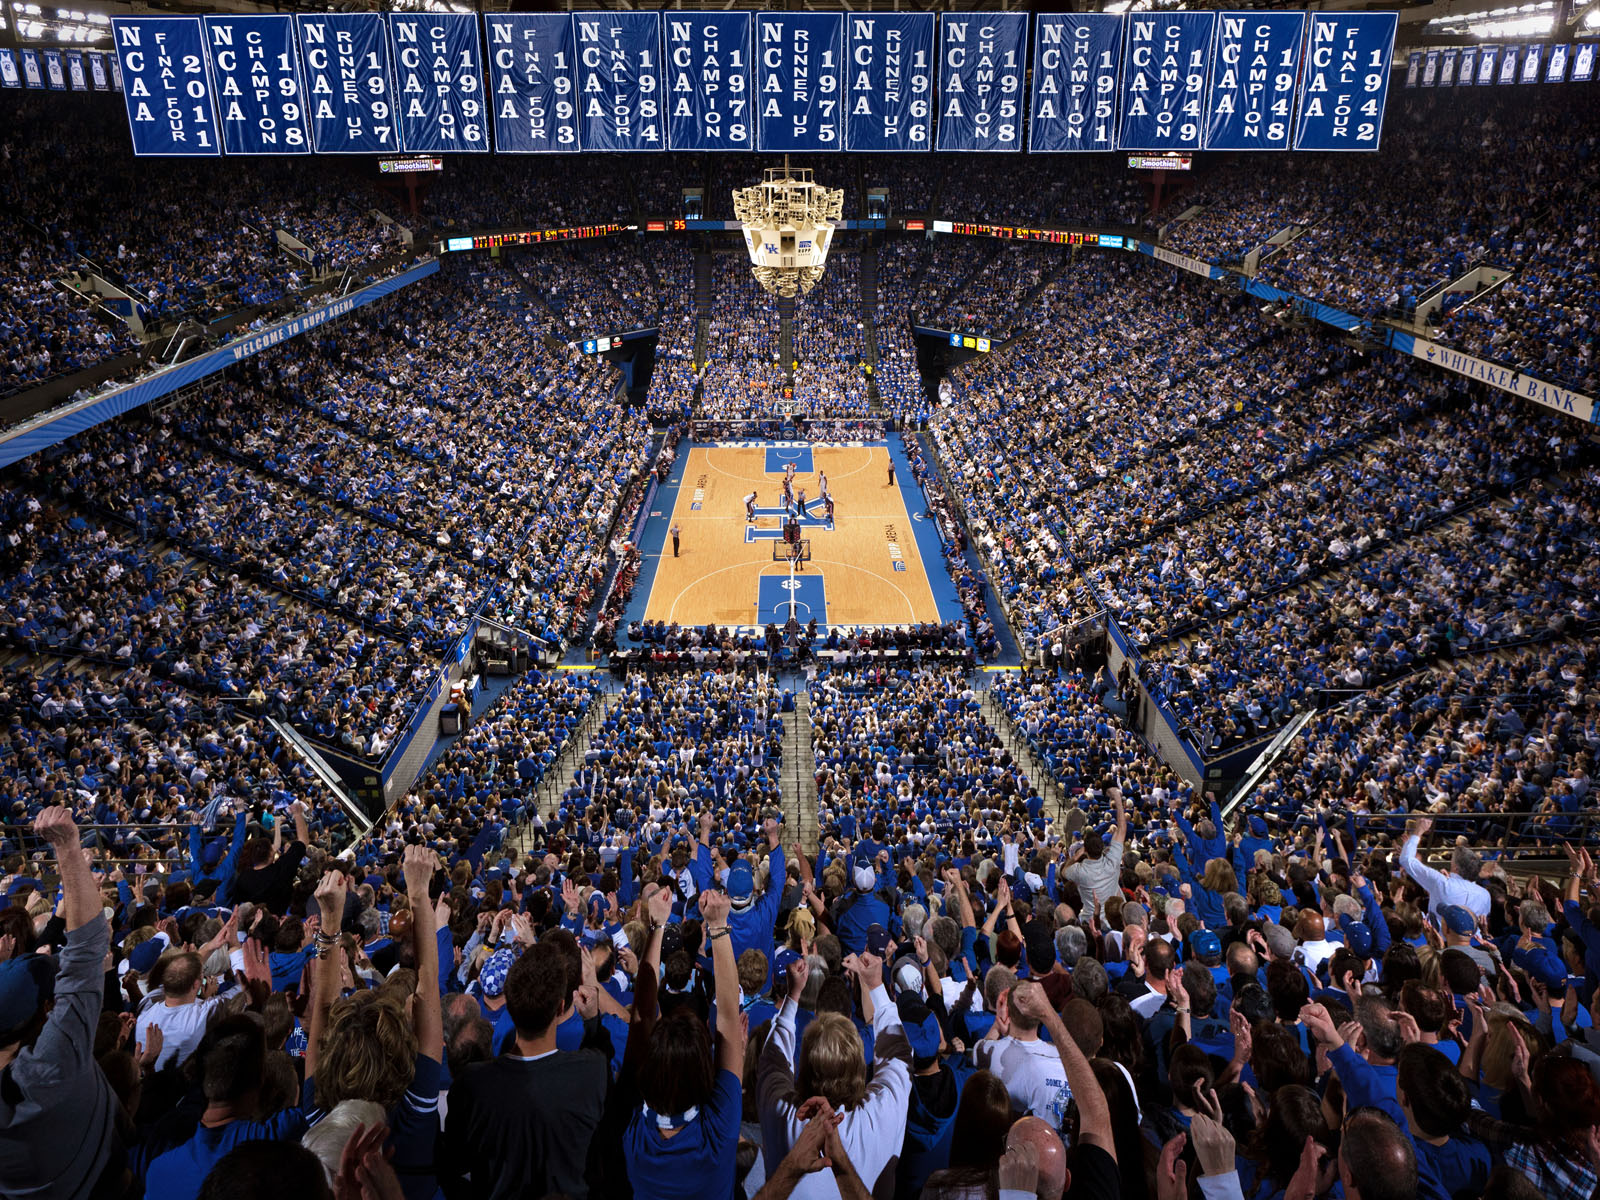 Kentucky Wildcats Basketball Wallpaper Collection